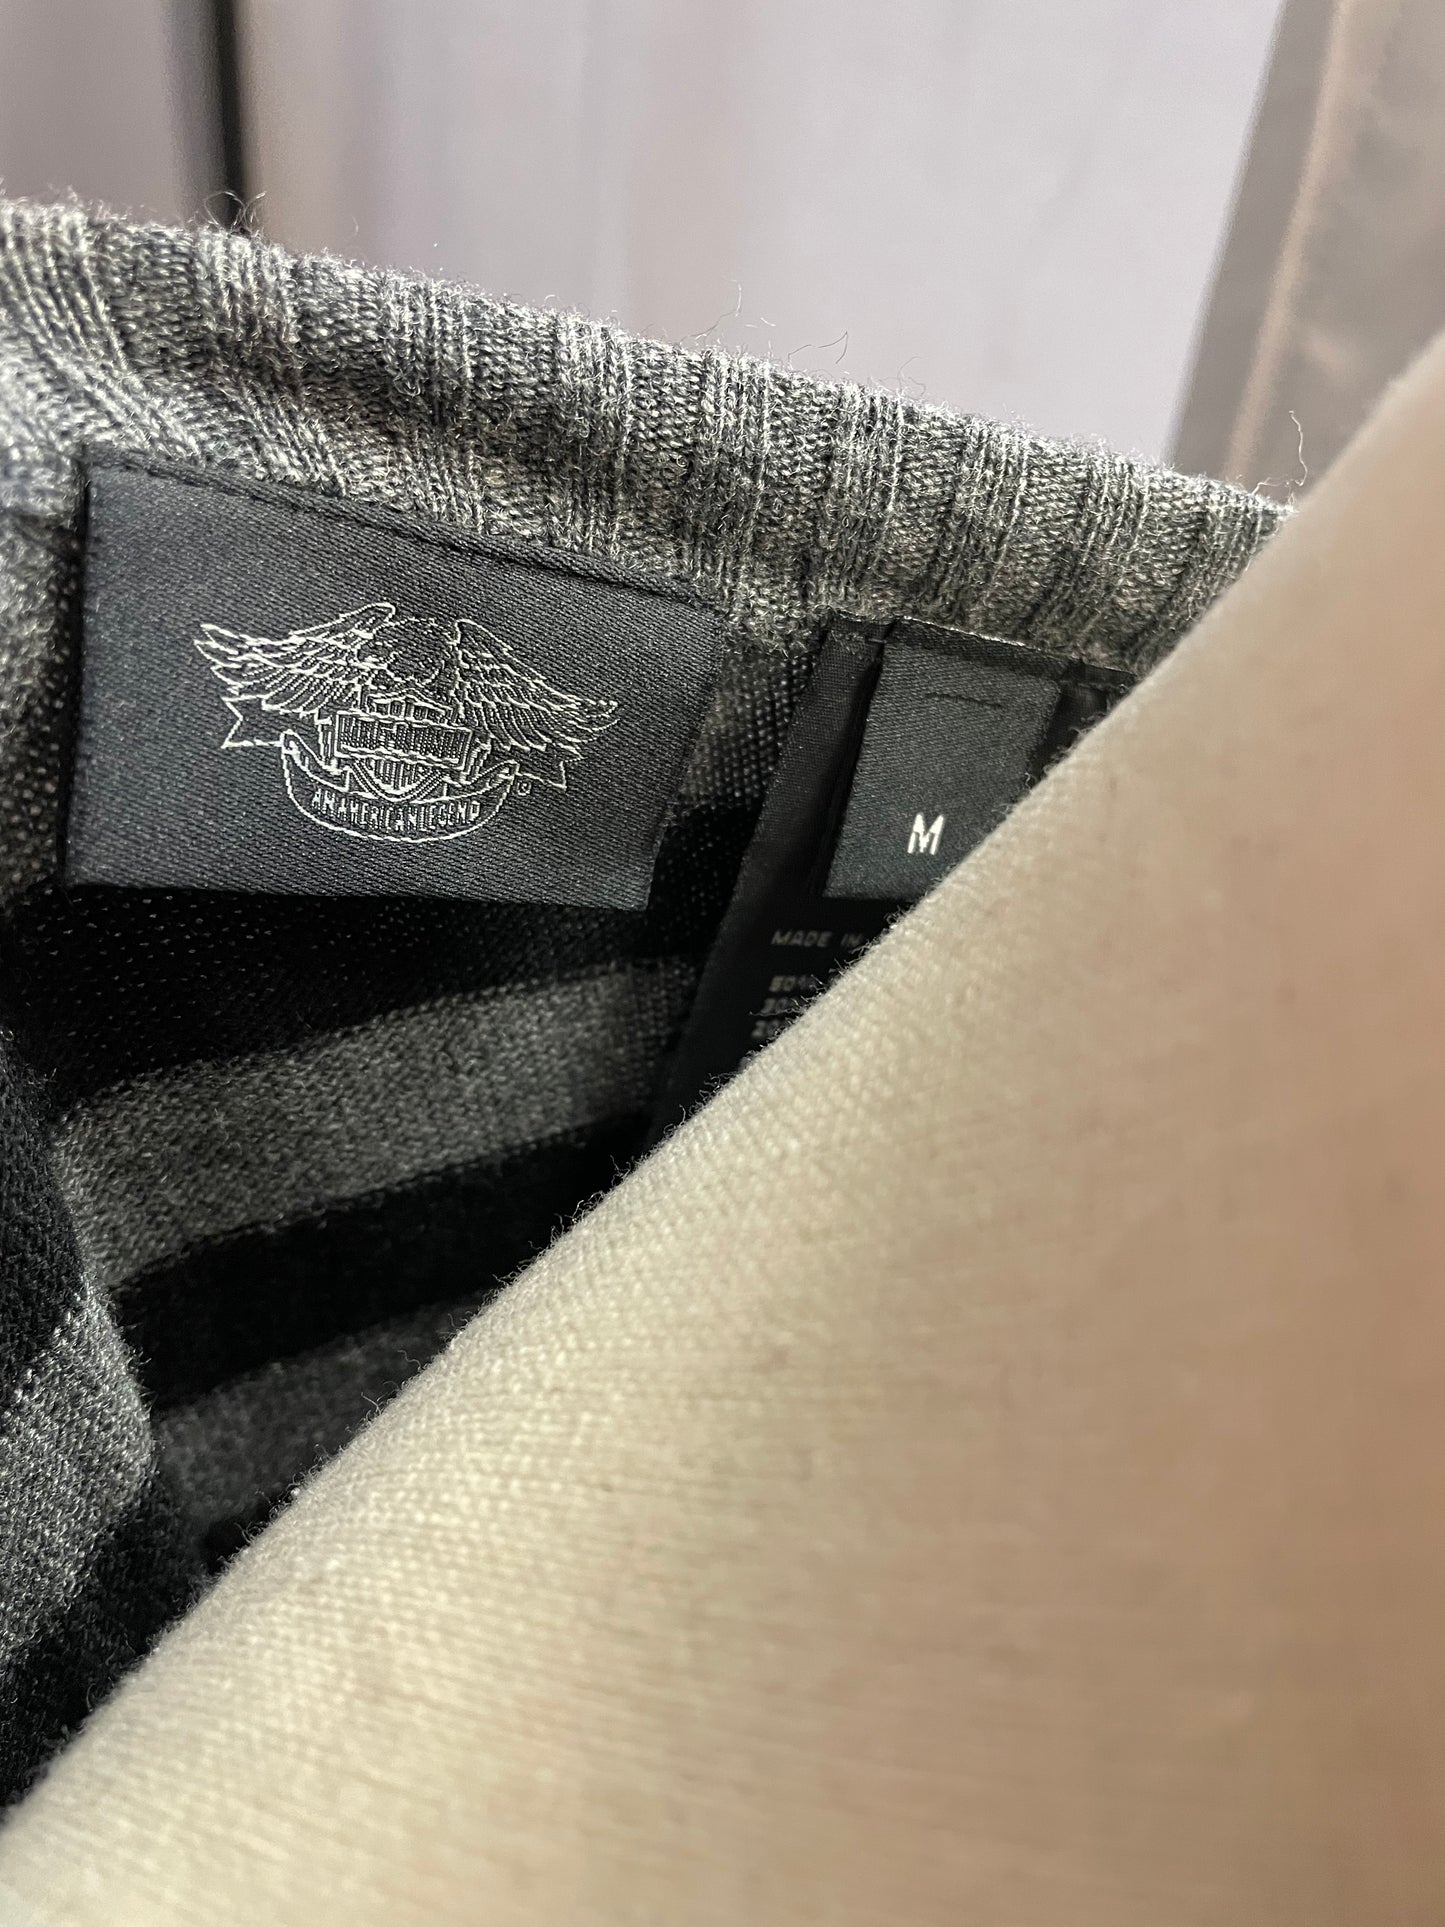 Harley Davidson Long Sleeved Knit Top (M)